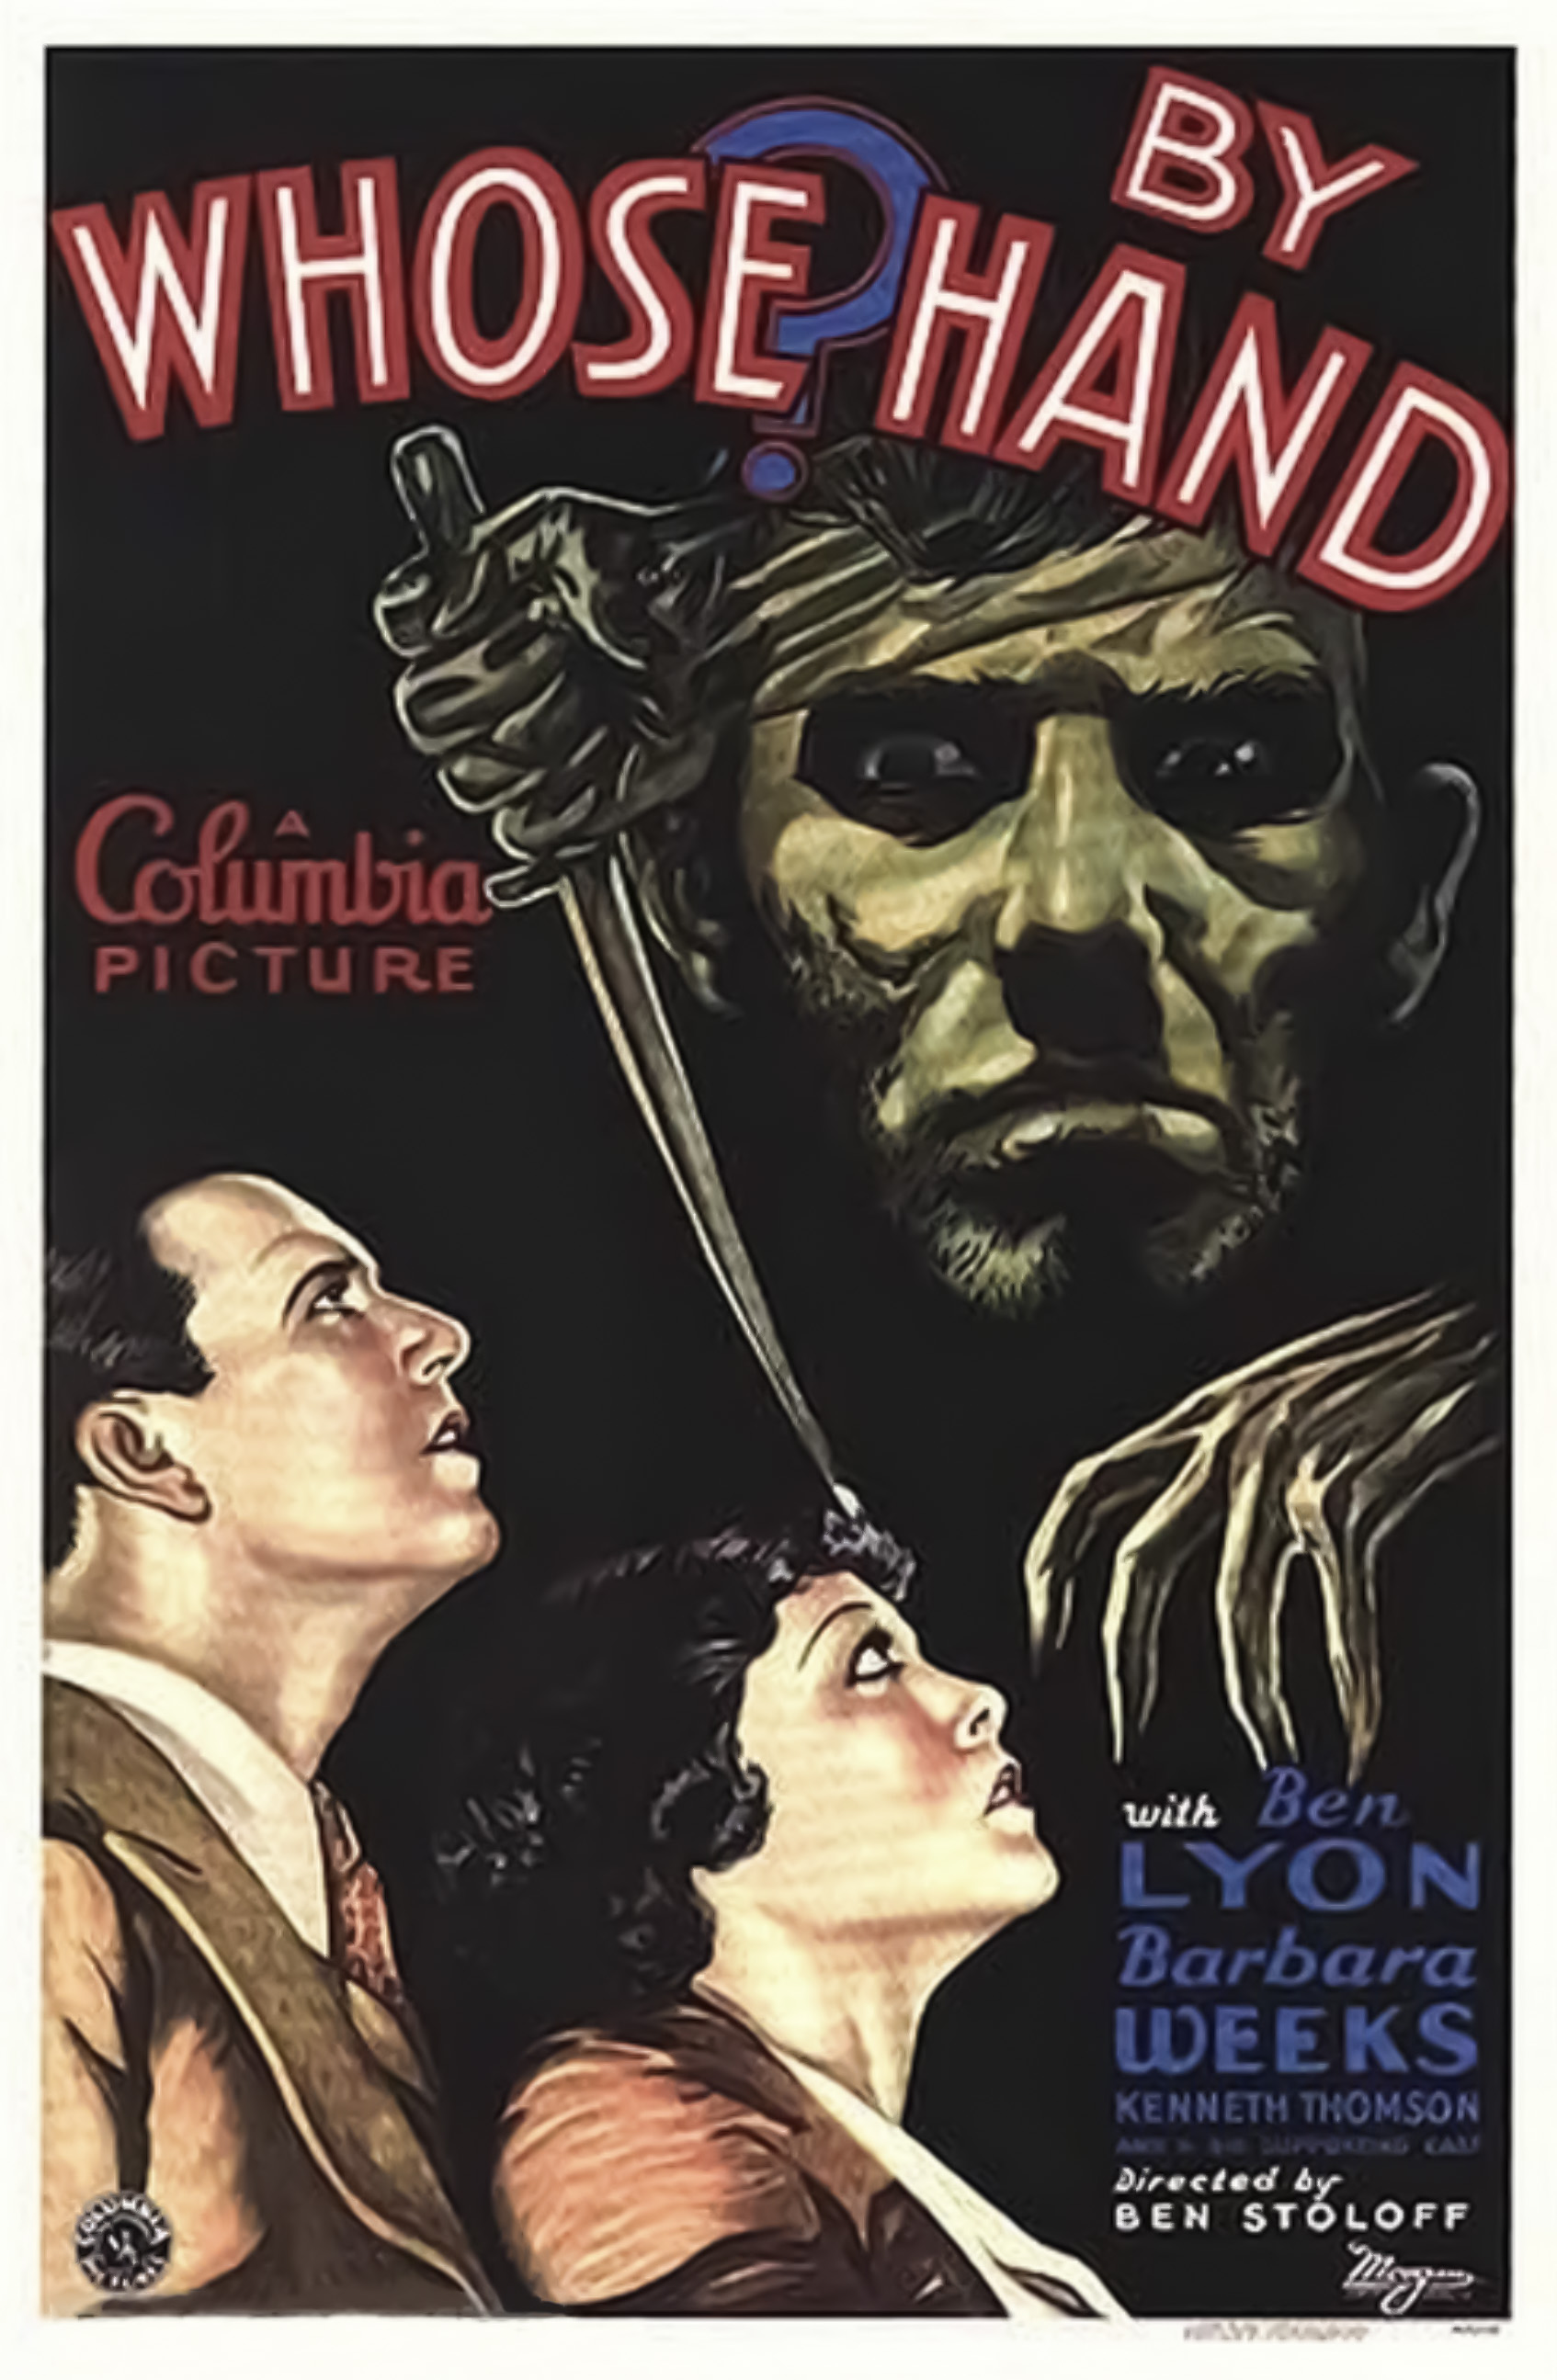 By Whose Hand? (1932) Screenshot 4 